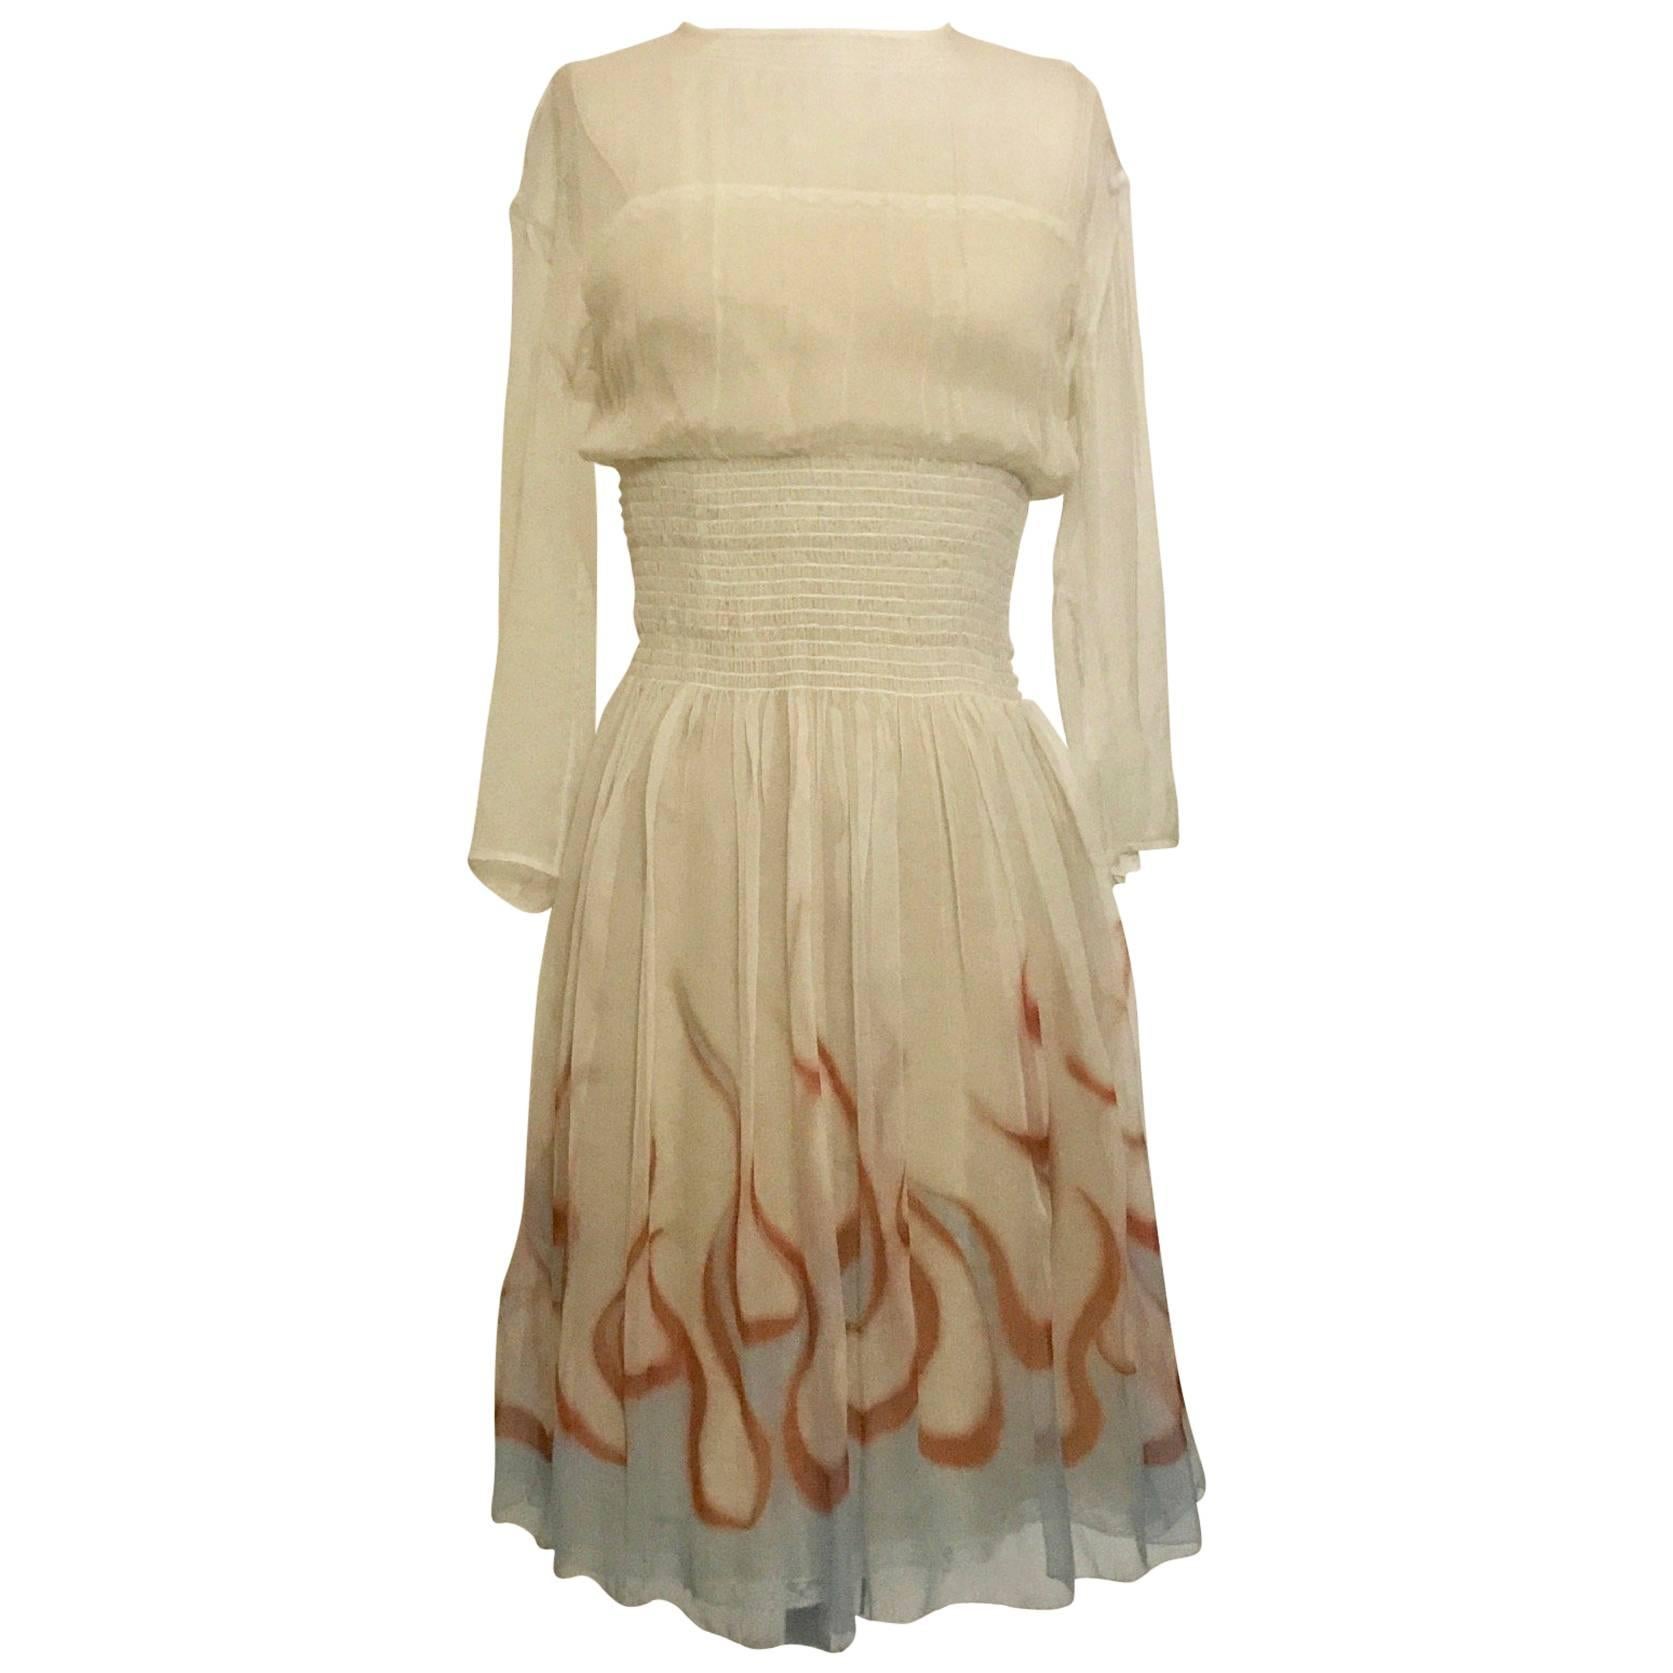 Prada Runway Flame Dress in Cream Silk Chiffon, 2012 